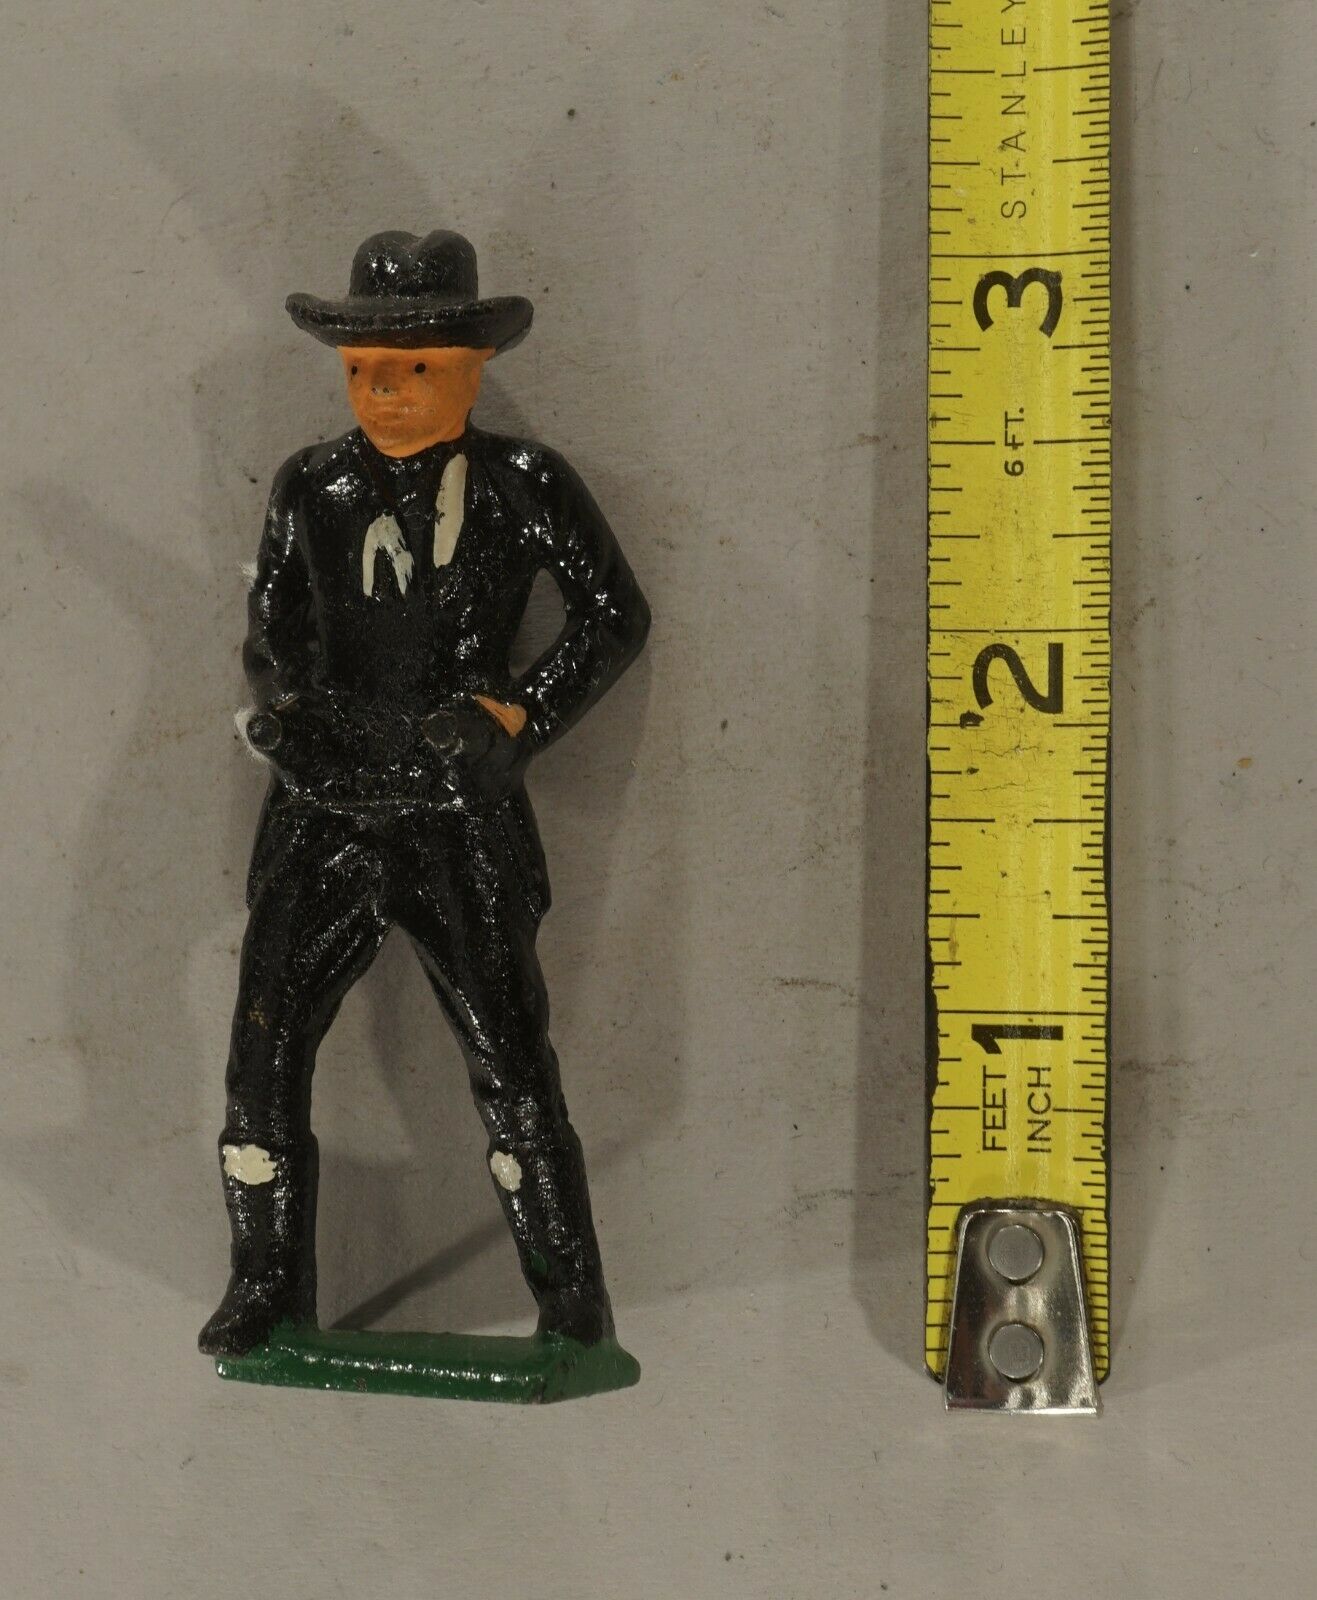 Original Vintage Antique Toy Cowboy Drawing Pistols Lead Figure (inv. No. 9260)